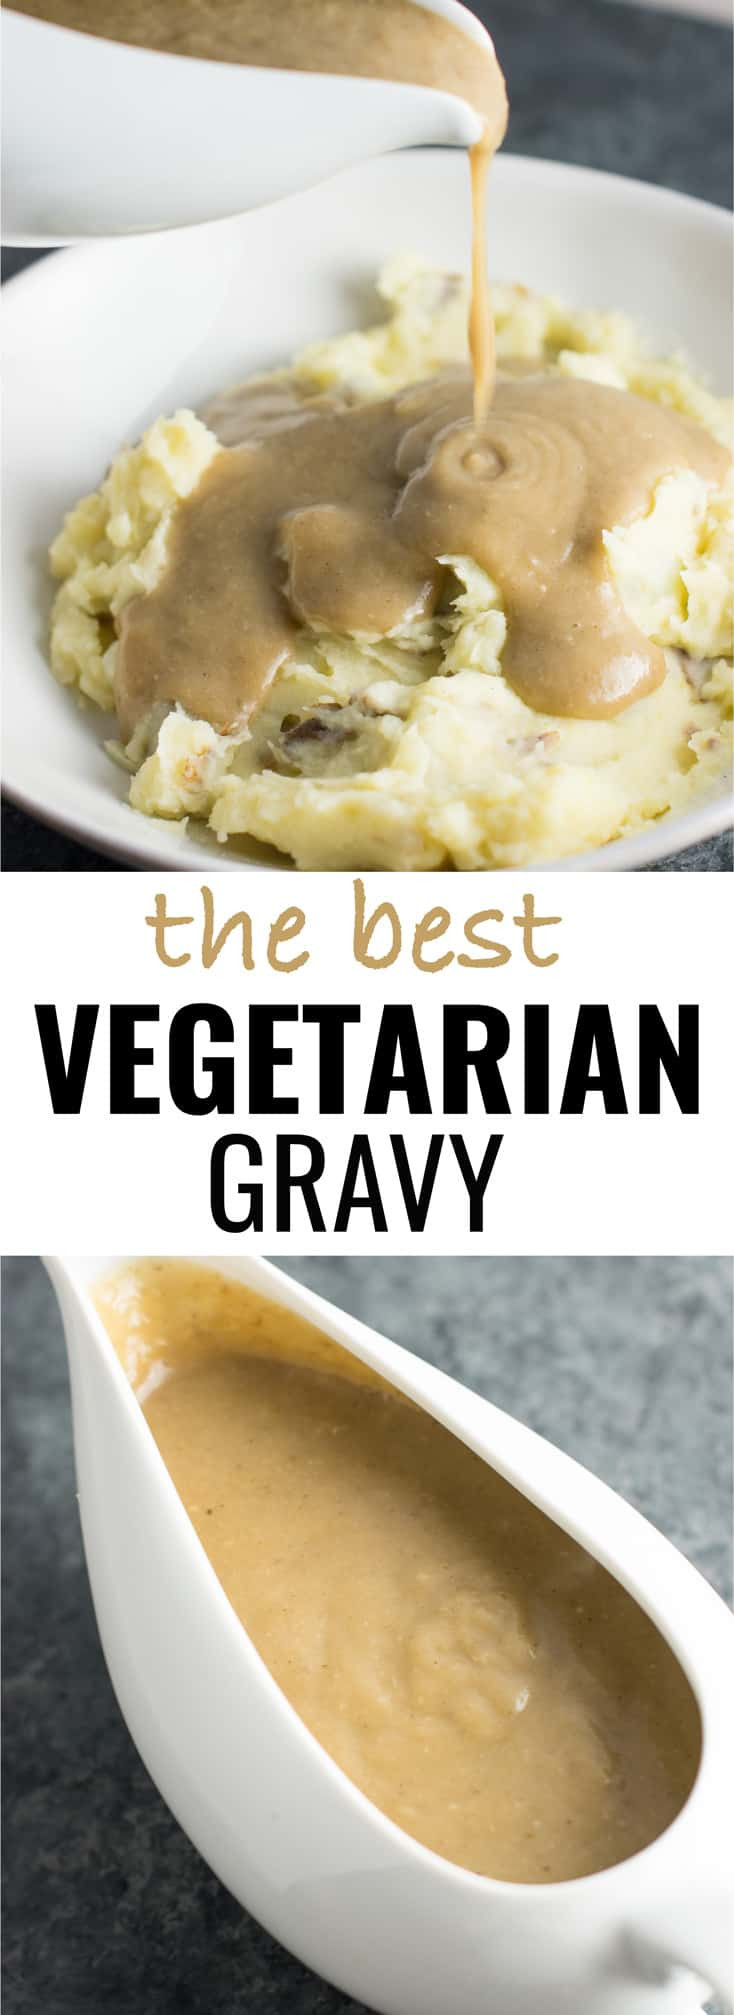 Vegan Gravy Recipe
 ve arian gravy recipe for mashed potatoes